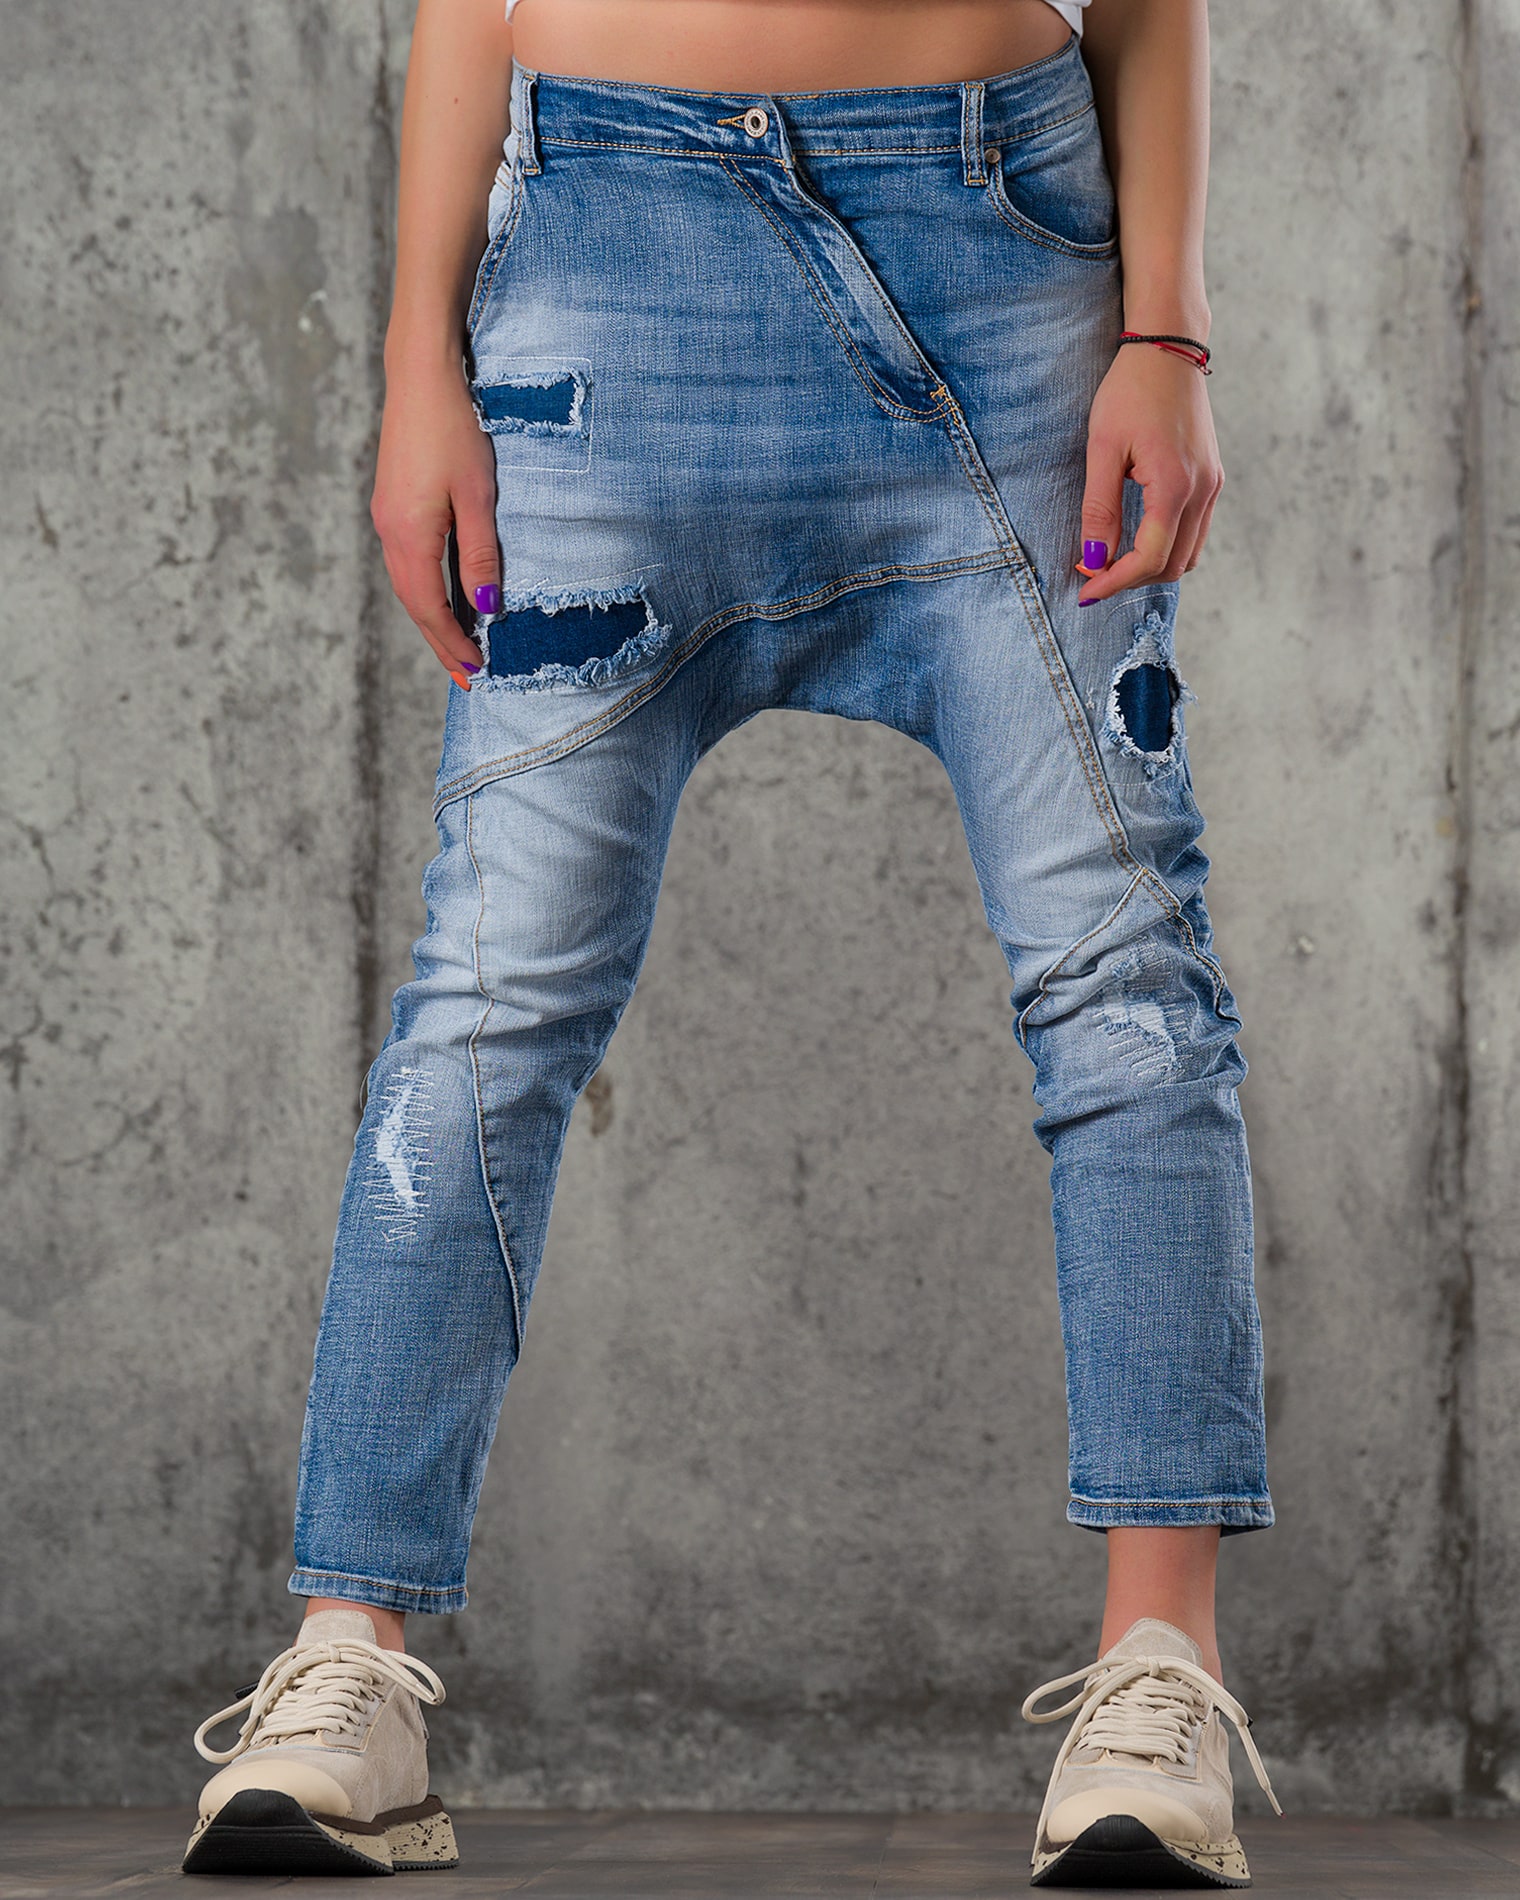 Campari Jeans, Blue Color